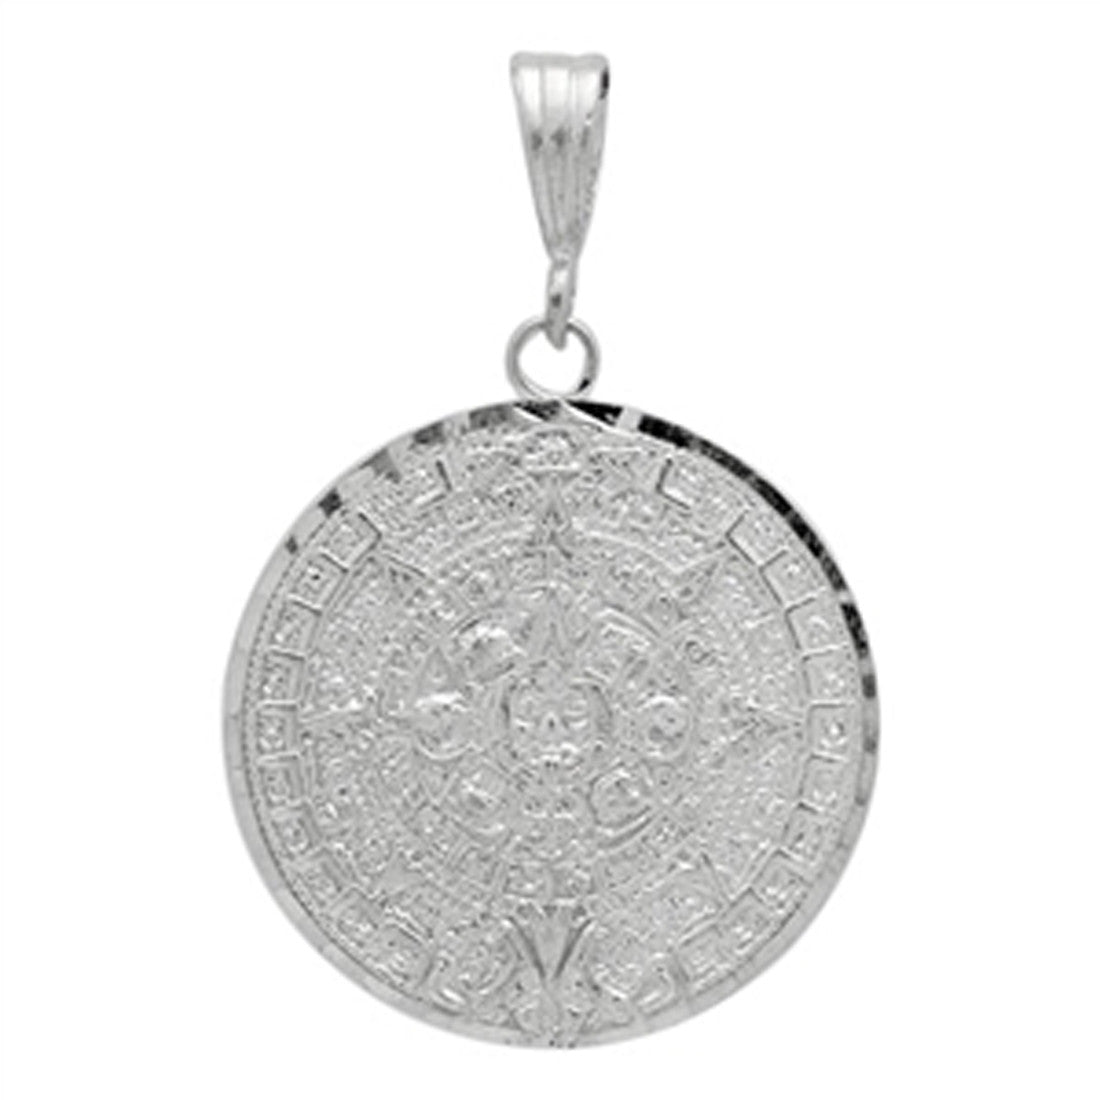 Aztec Calendar Pendant 925 Sterling Silver Diamond Cut charm 28mm Long-Blue Apple Jewelary